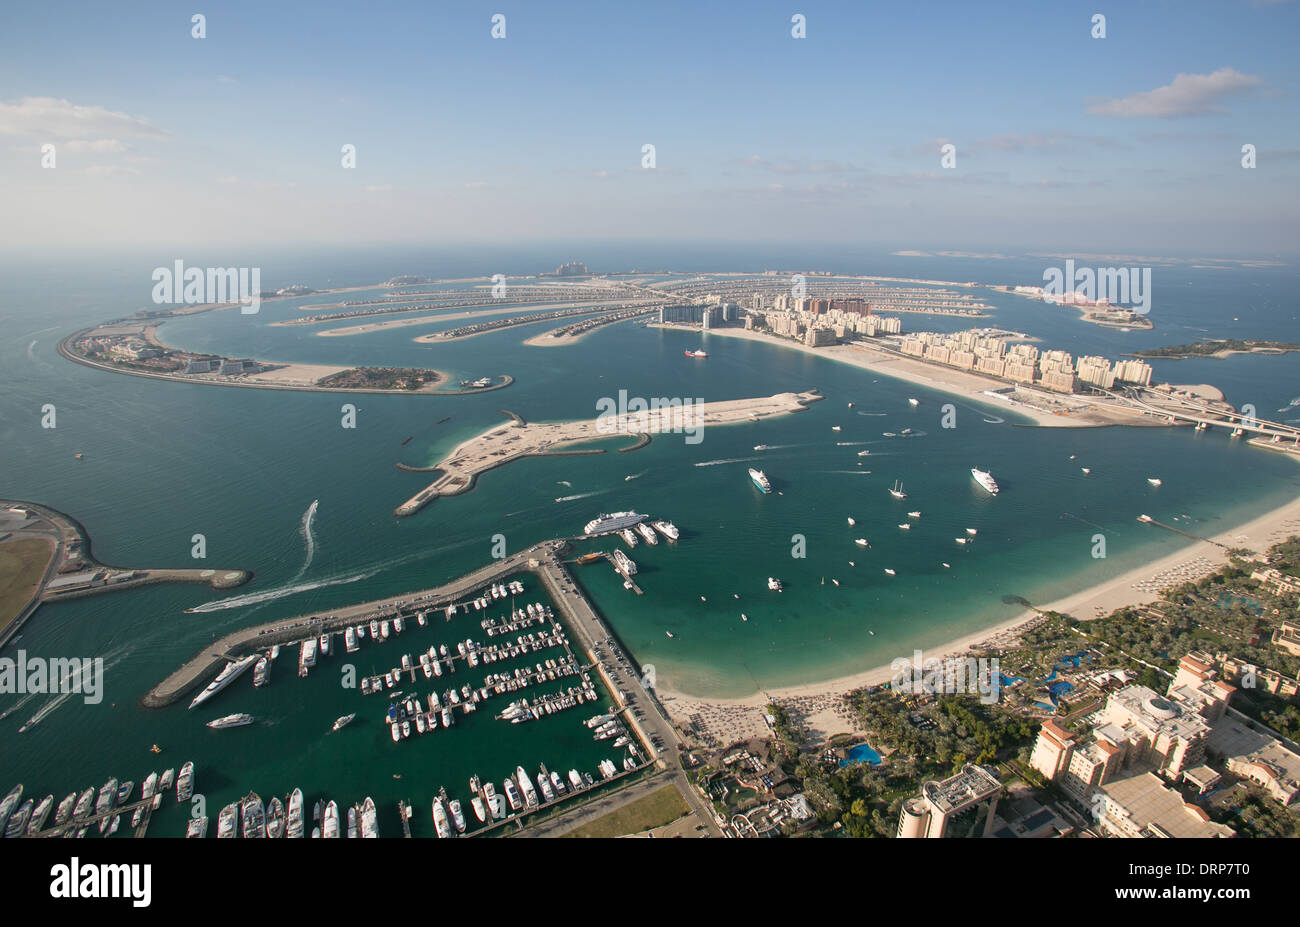 Aerial photo of Dubai in UAE showing Palm Jumeirah Stock Photo